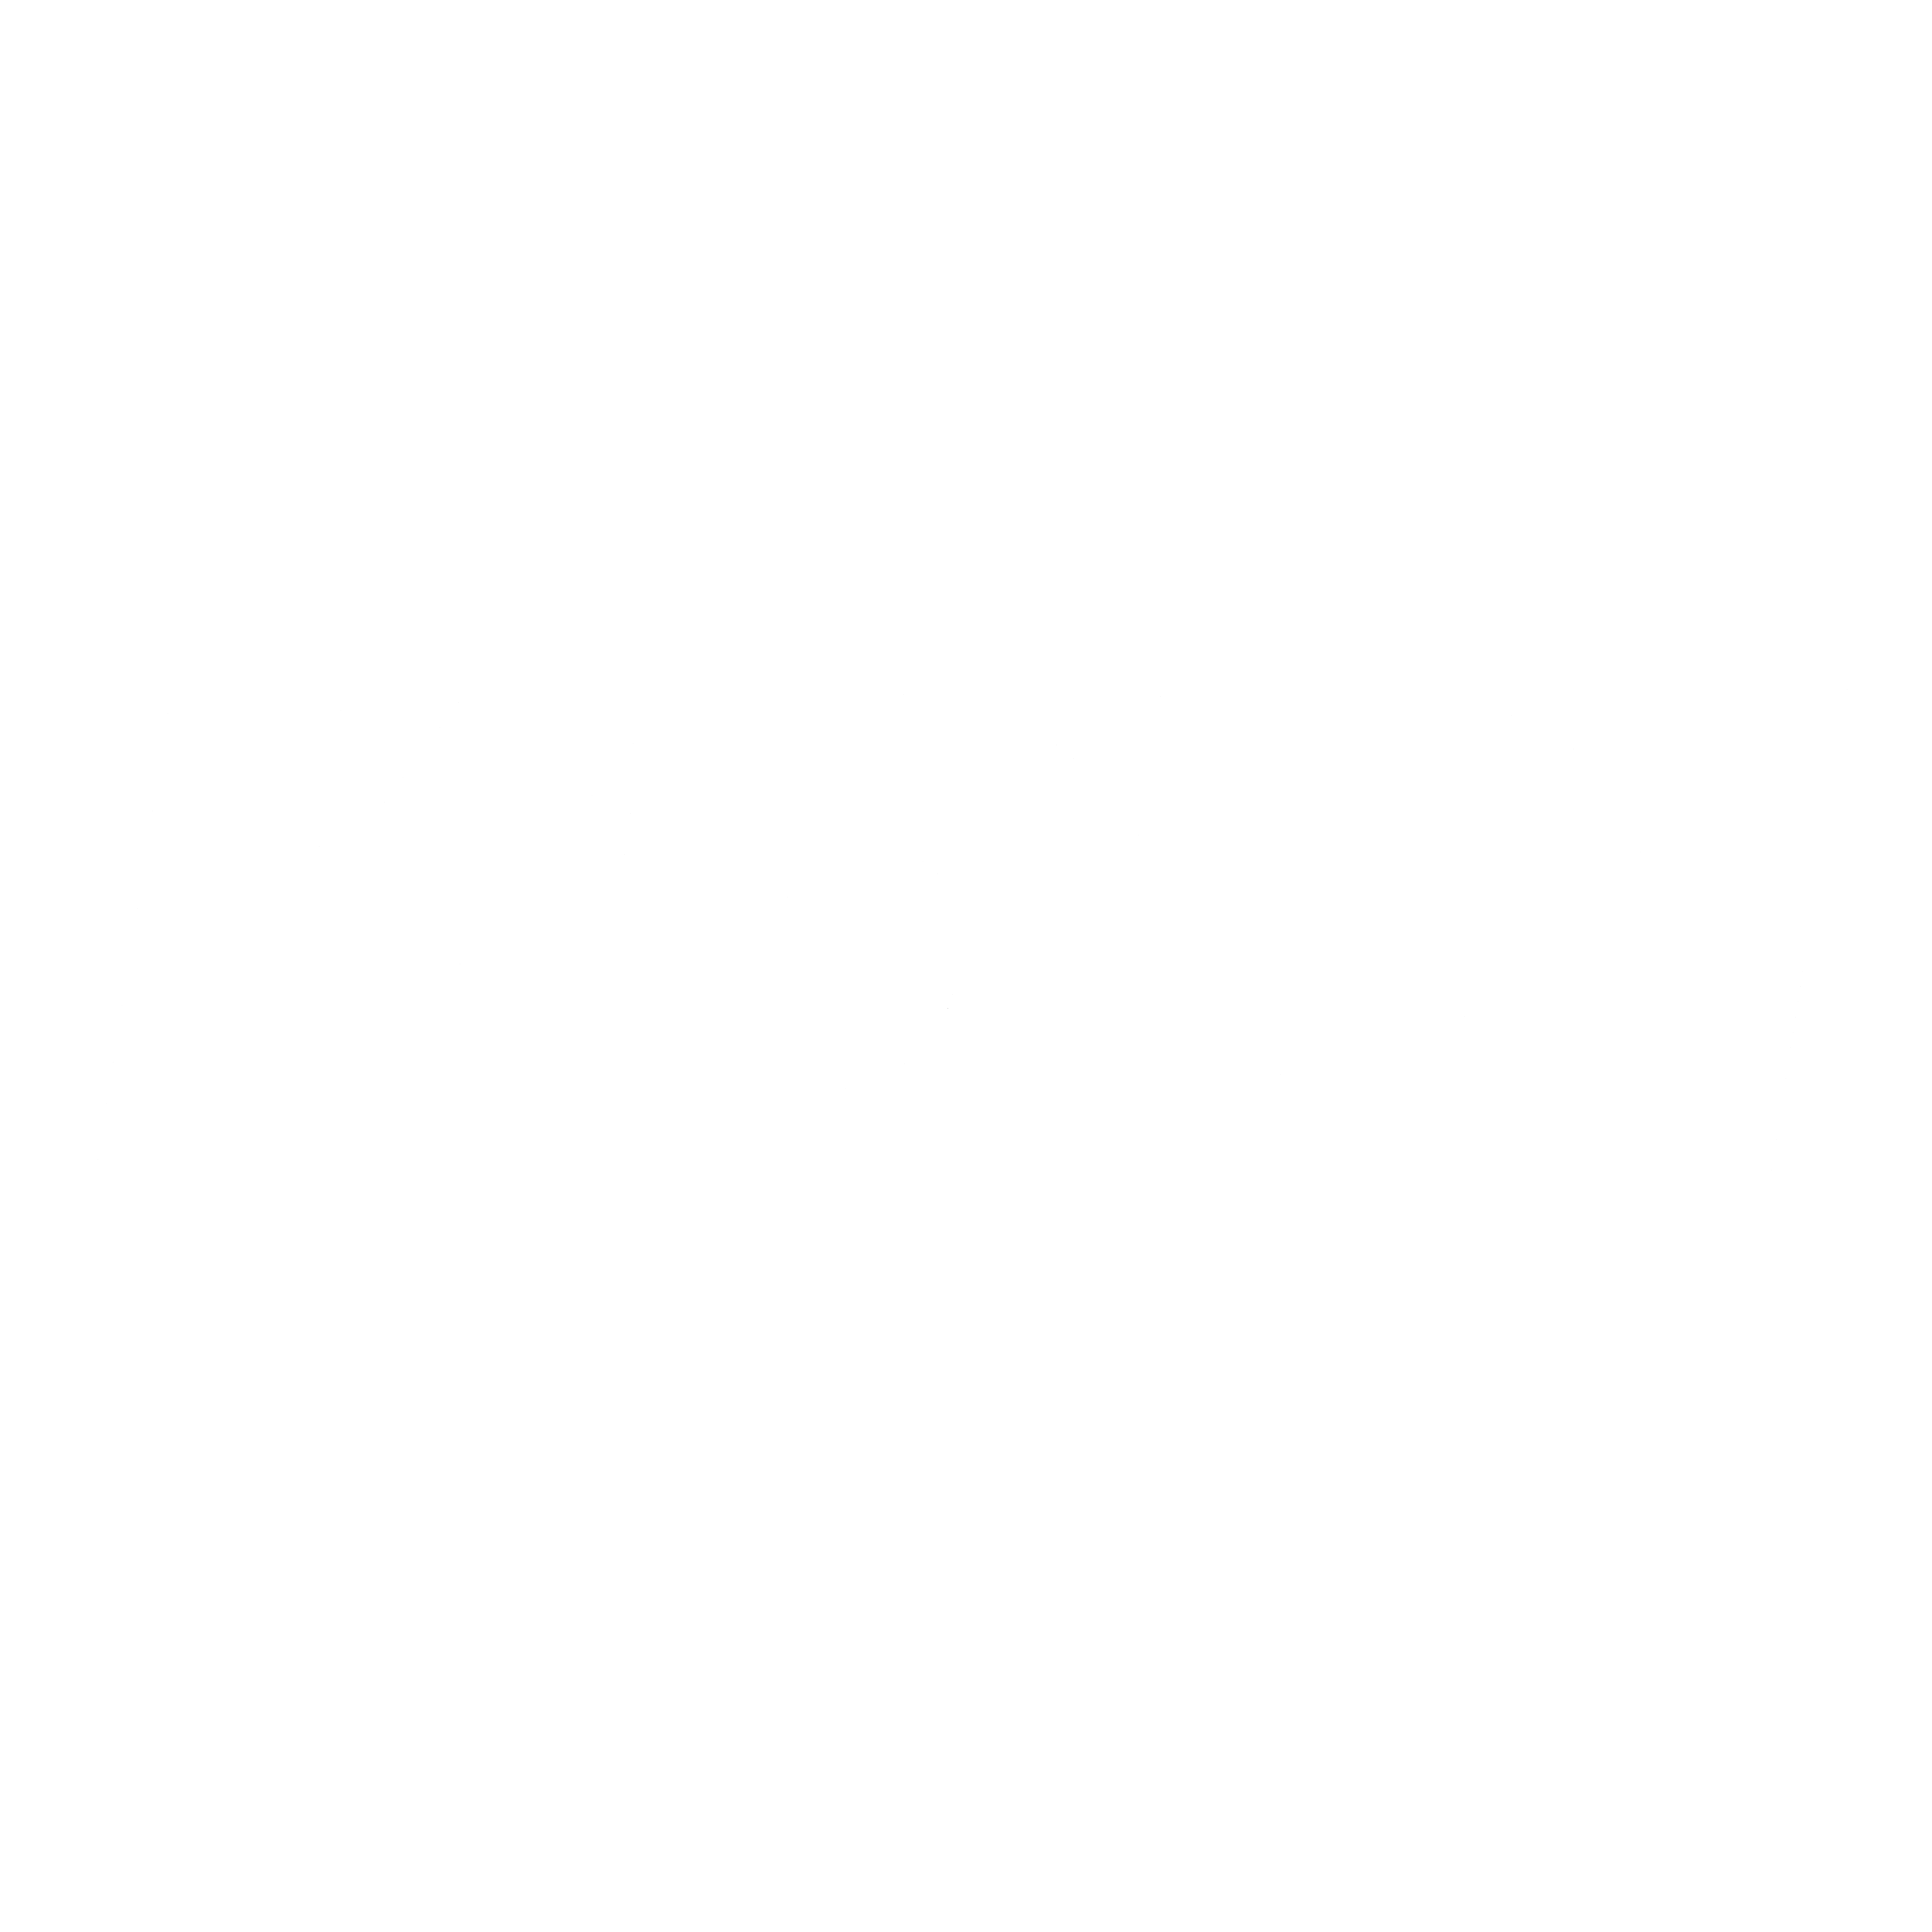 KDDI Logo - KDDI Logo PNG Transparent & SVG Vector - Freebie Supply